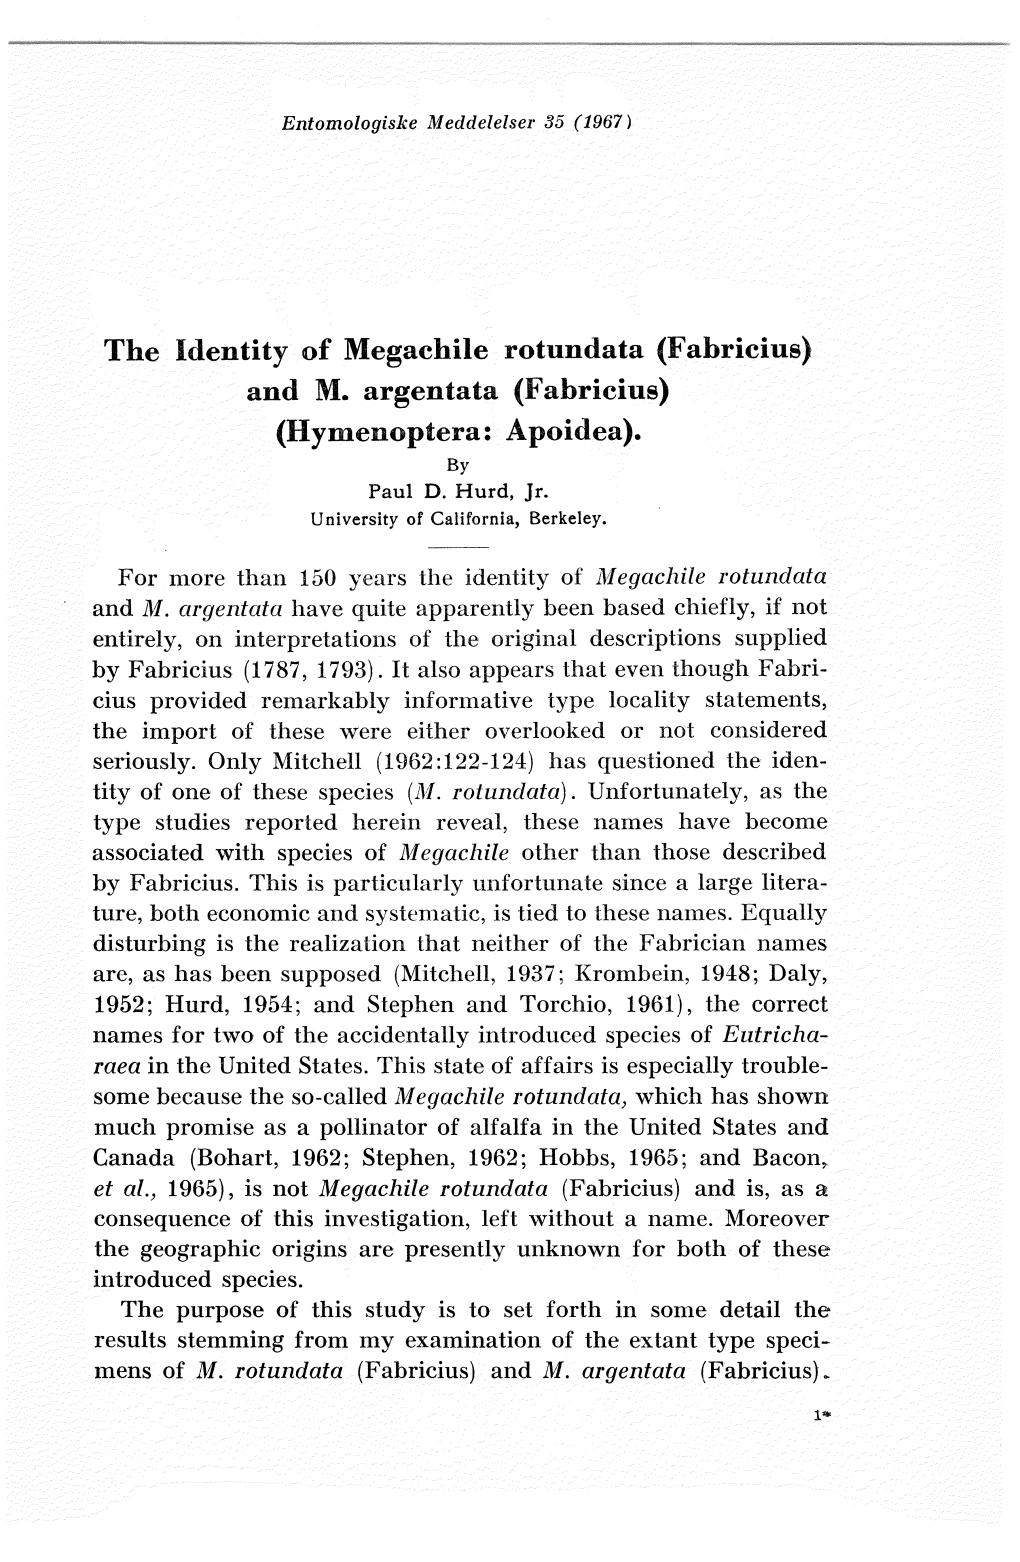 The Identity of Megachile Rotundata (Fahricius) and M